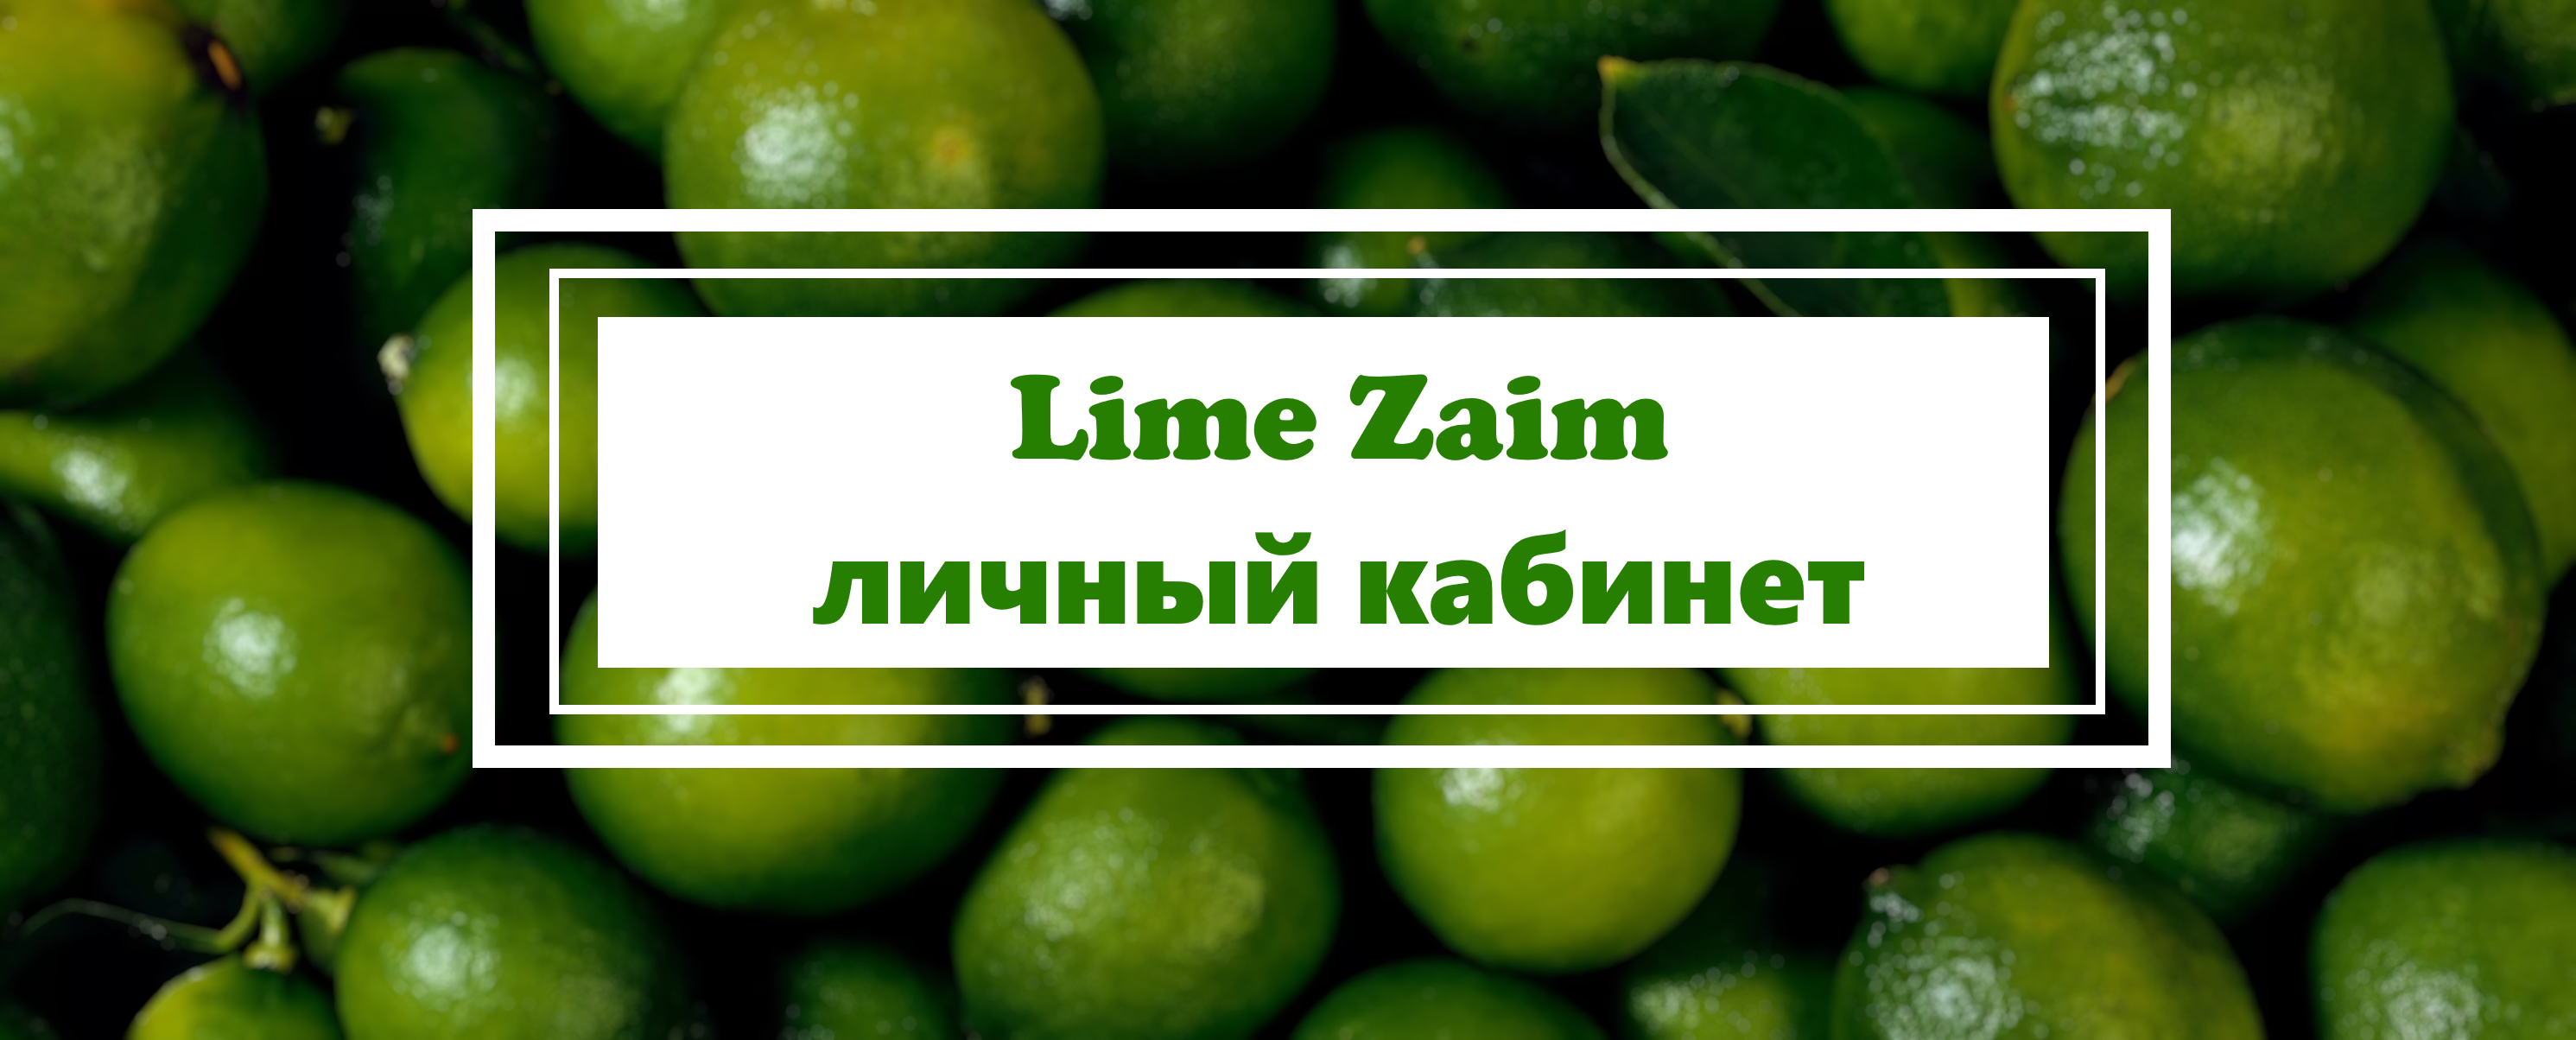 Lime Zaim